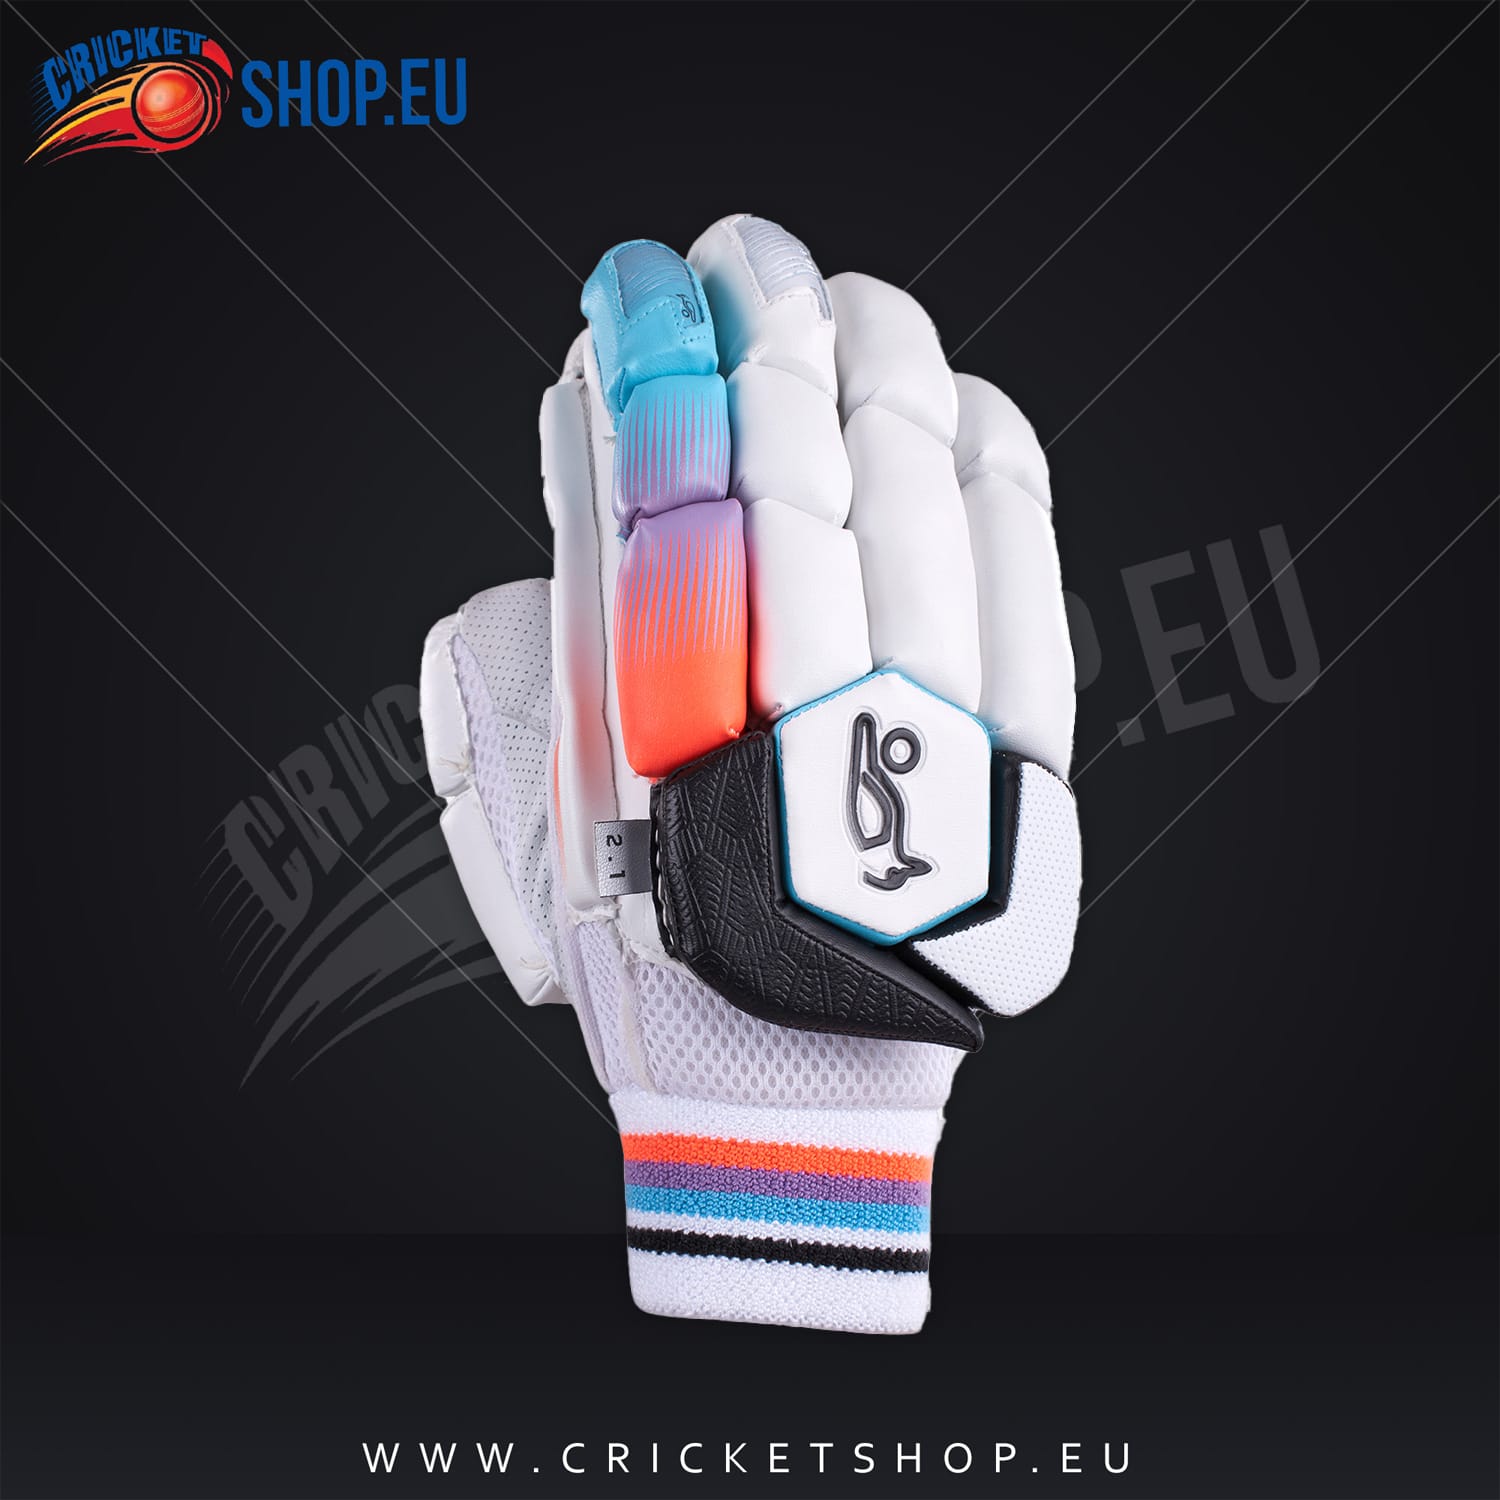 Kookaburra Aura 2.1 Cricket Batting Gloves